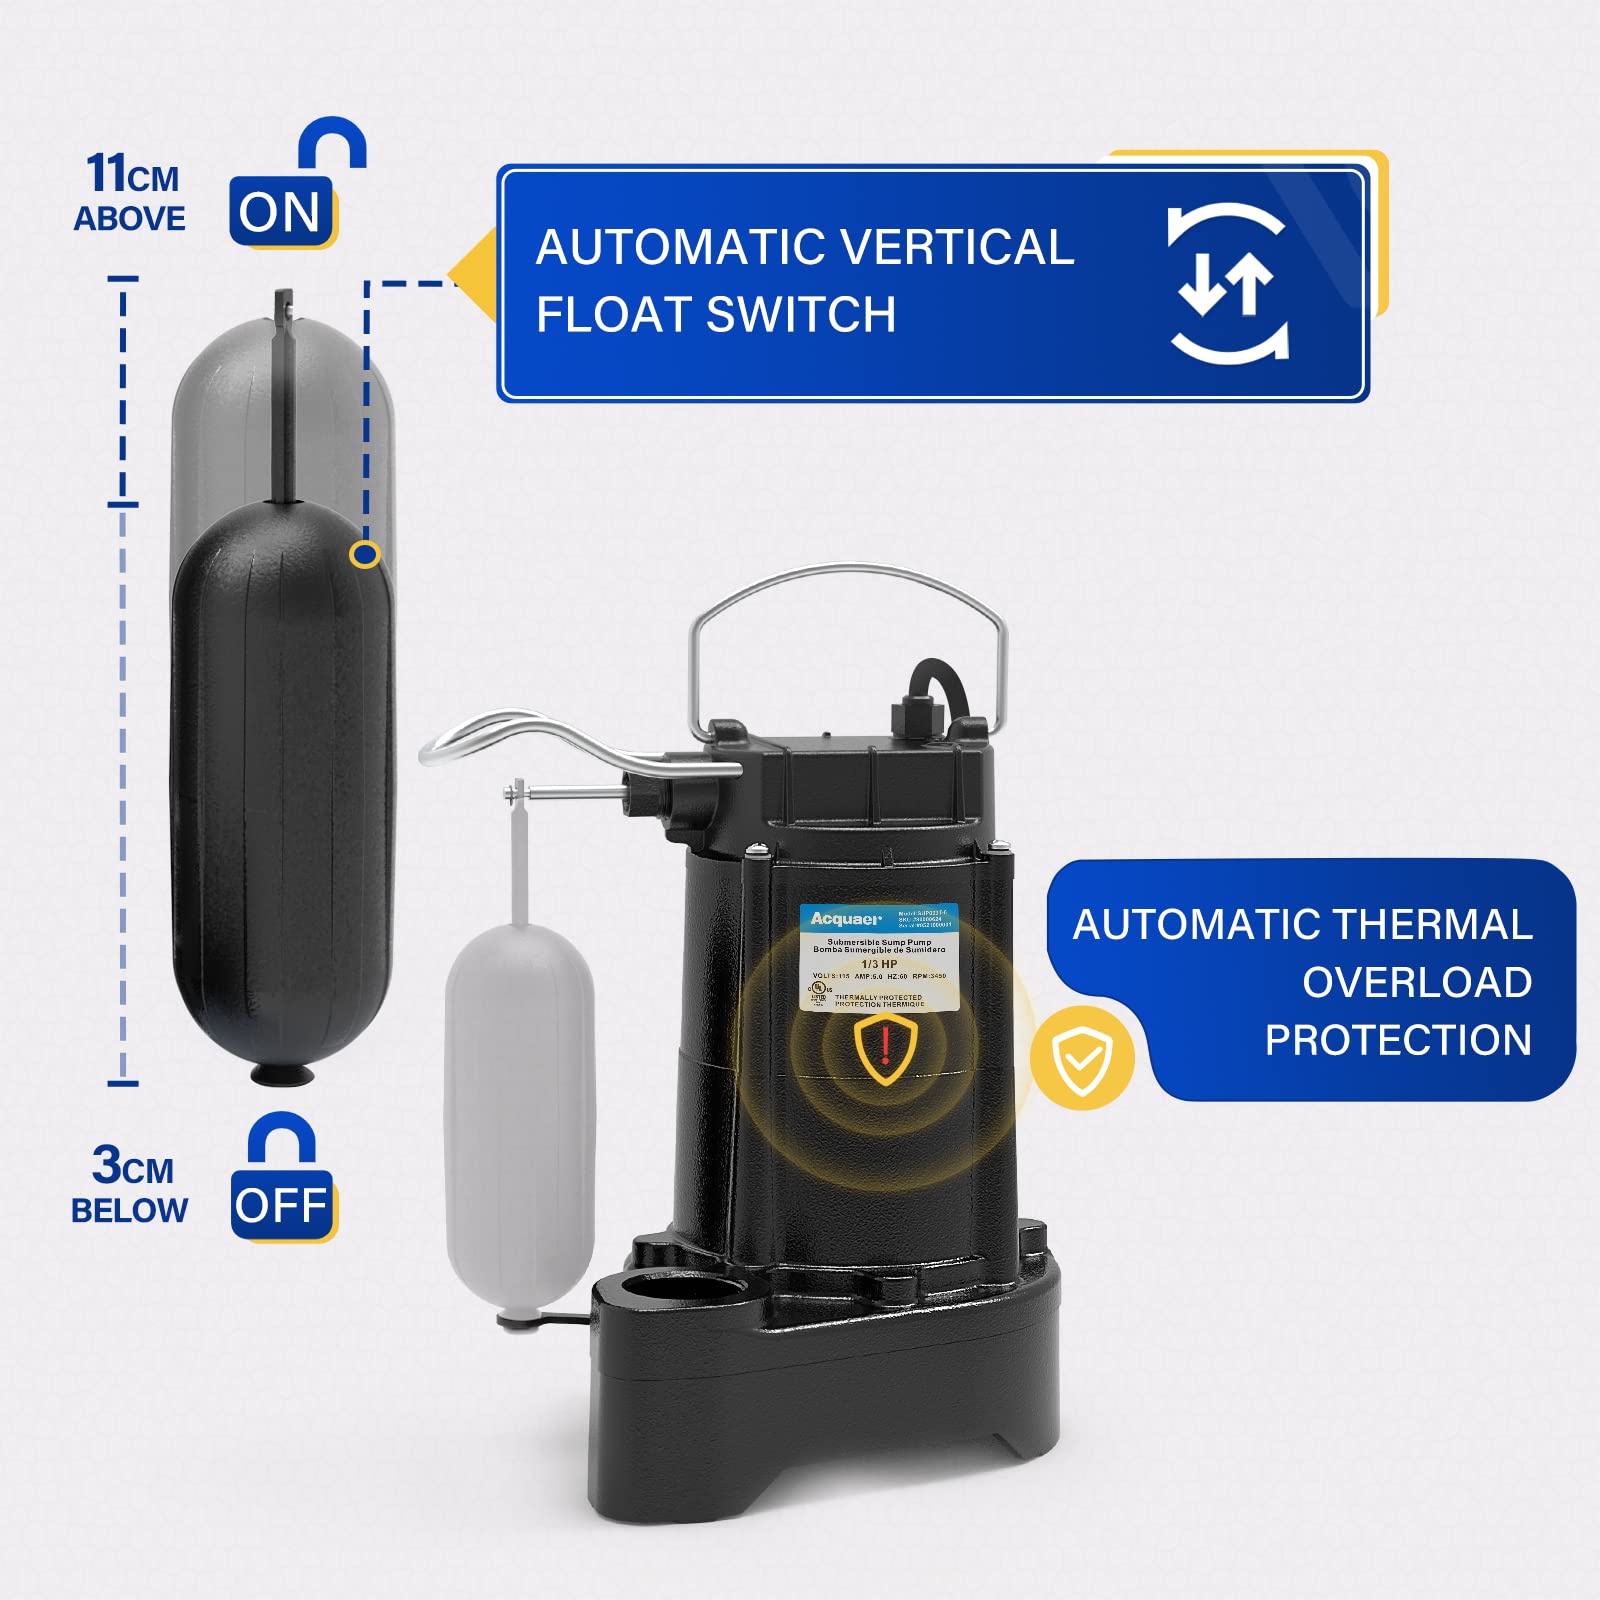 Acquaer 1/3 HP Submersible Sewage/Effluent Pump,3680 GPH - Acquaer